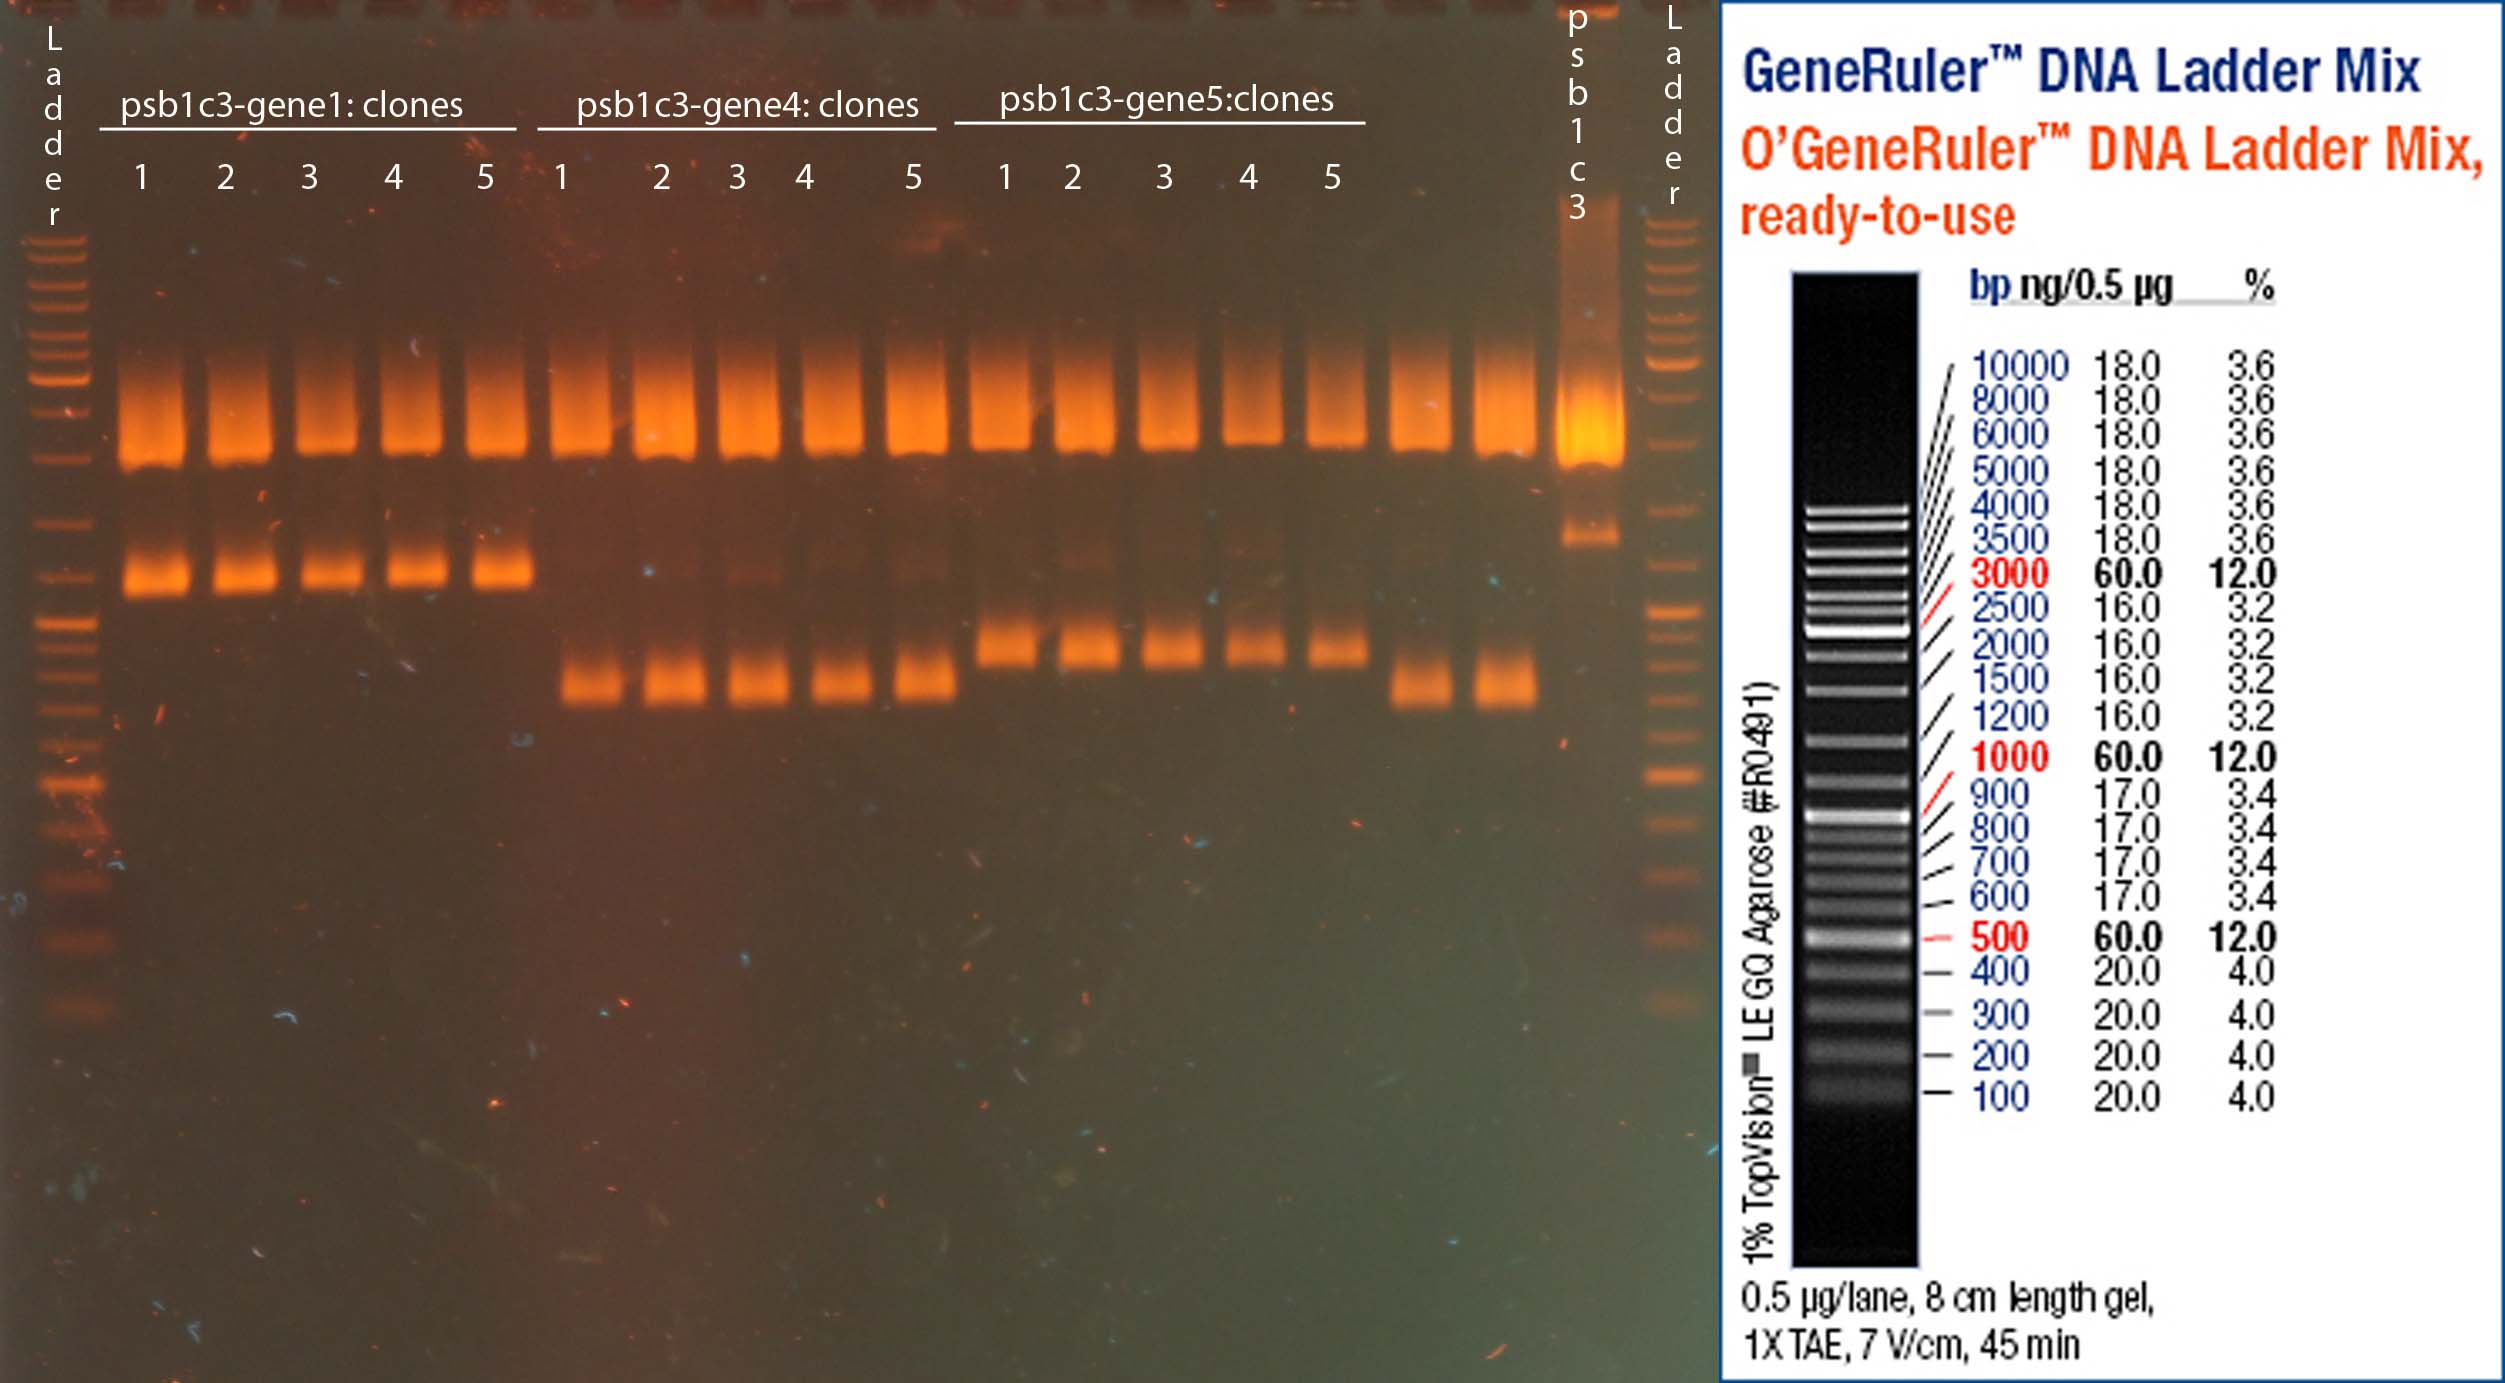 UP12 genes1.4.5pcr2012-09-13-1652.jpg